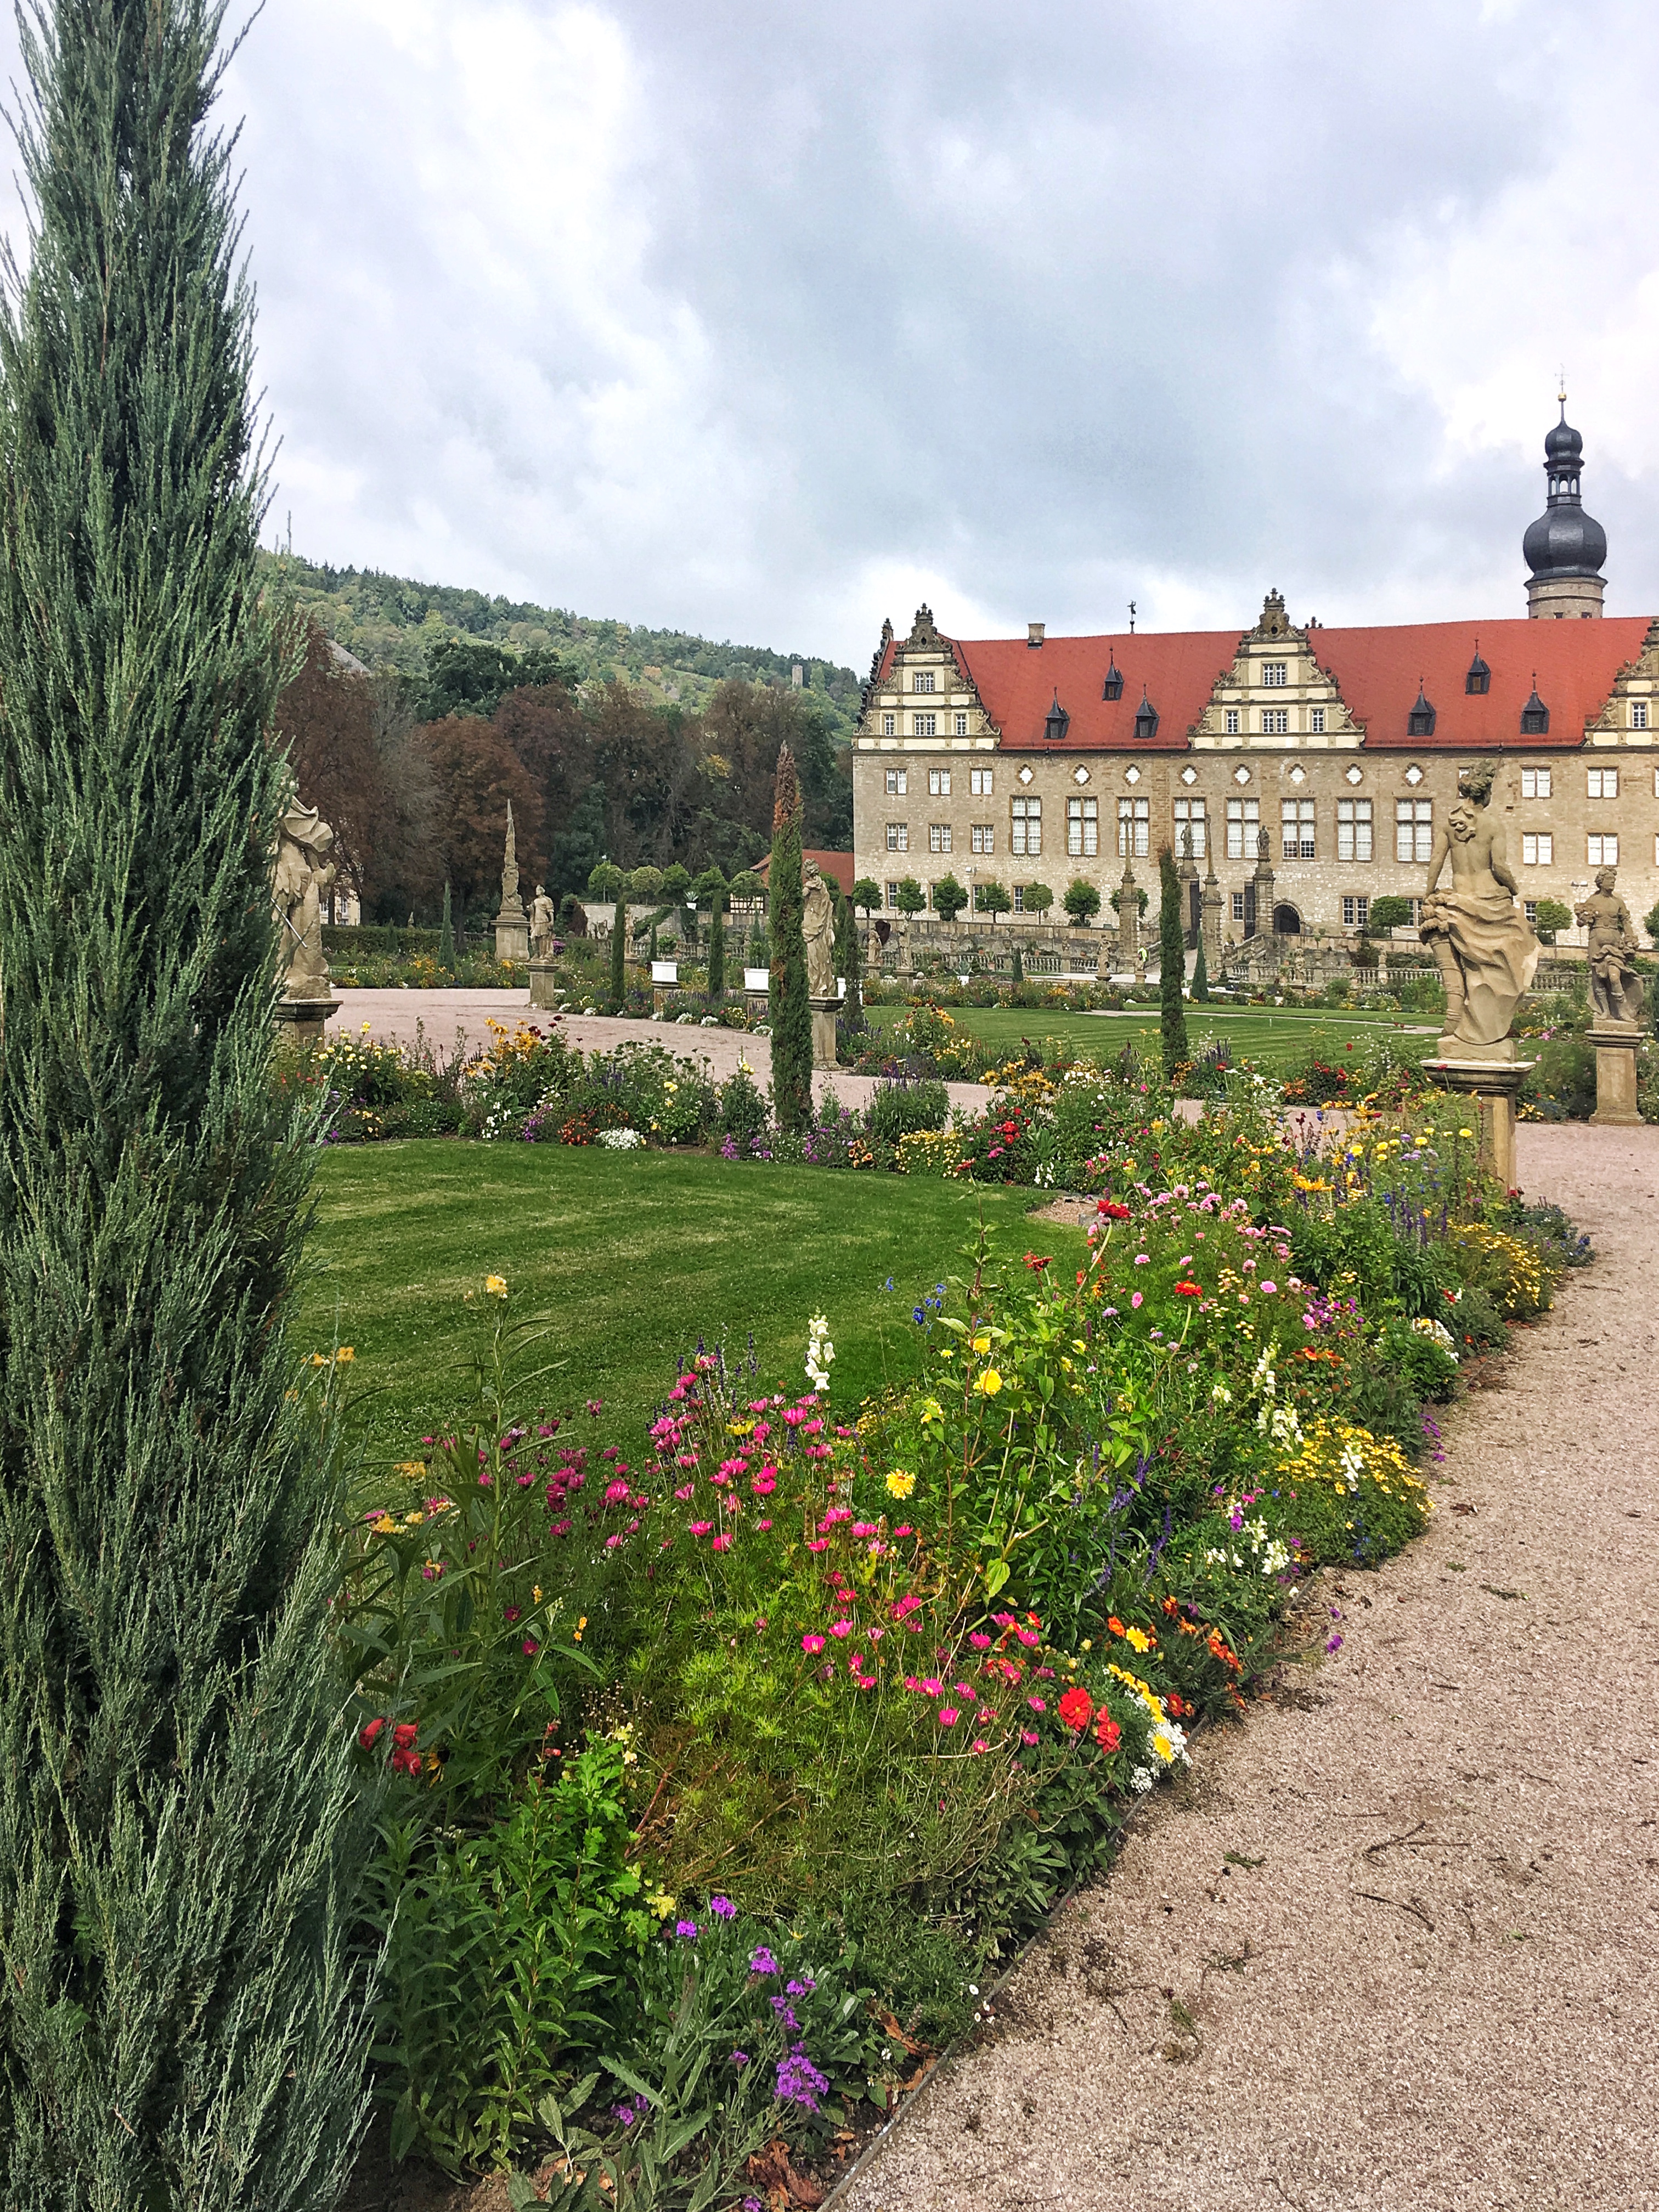 Weikersheim Castle Exterior and Gardens in Germany